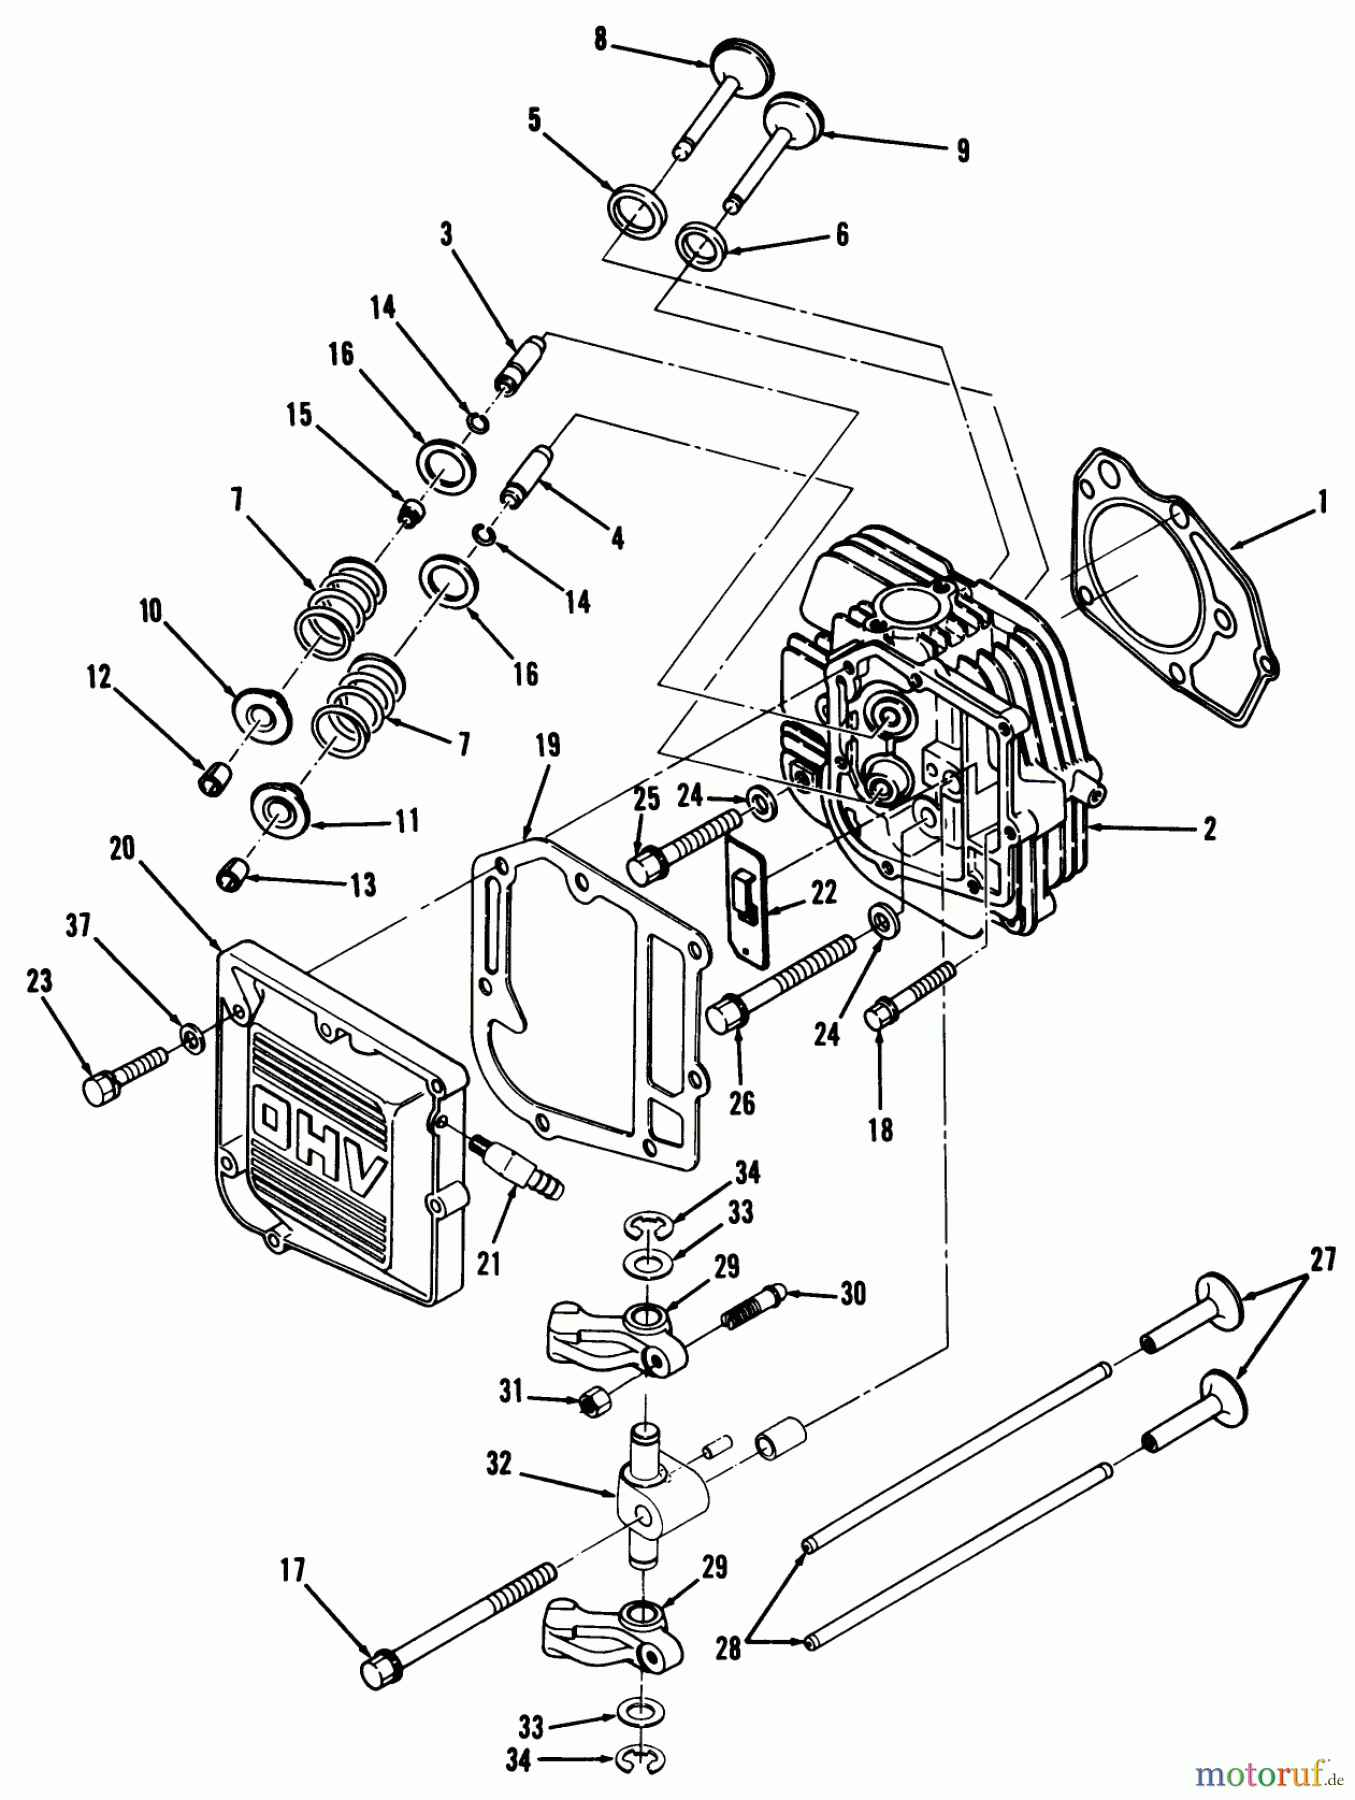  Toro Neu Mowers, Lawn & Garden Tractor Seite 1 32-10B502 (210-5) - Toro 210-5 Tractor, 1991 (1000001-1999999) 12HP ENGINE CYLINDER HEAD & VALVES ASSEMBLY